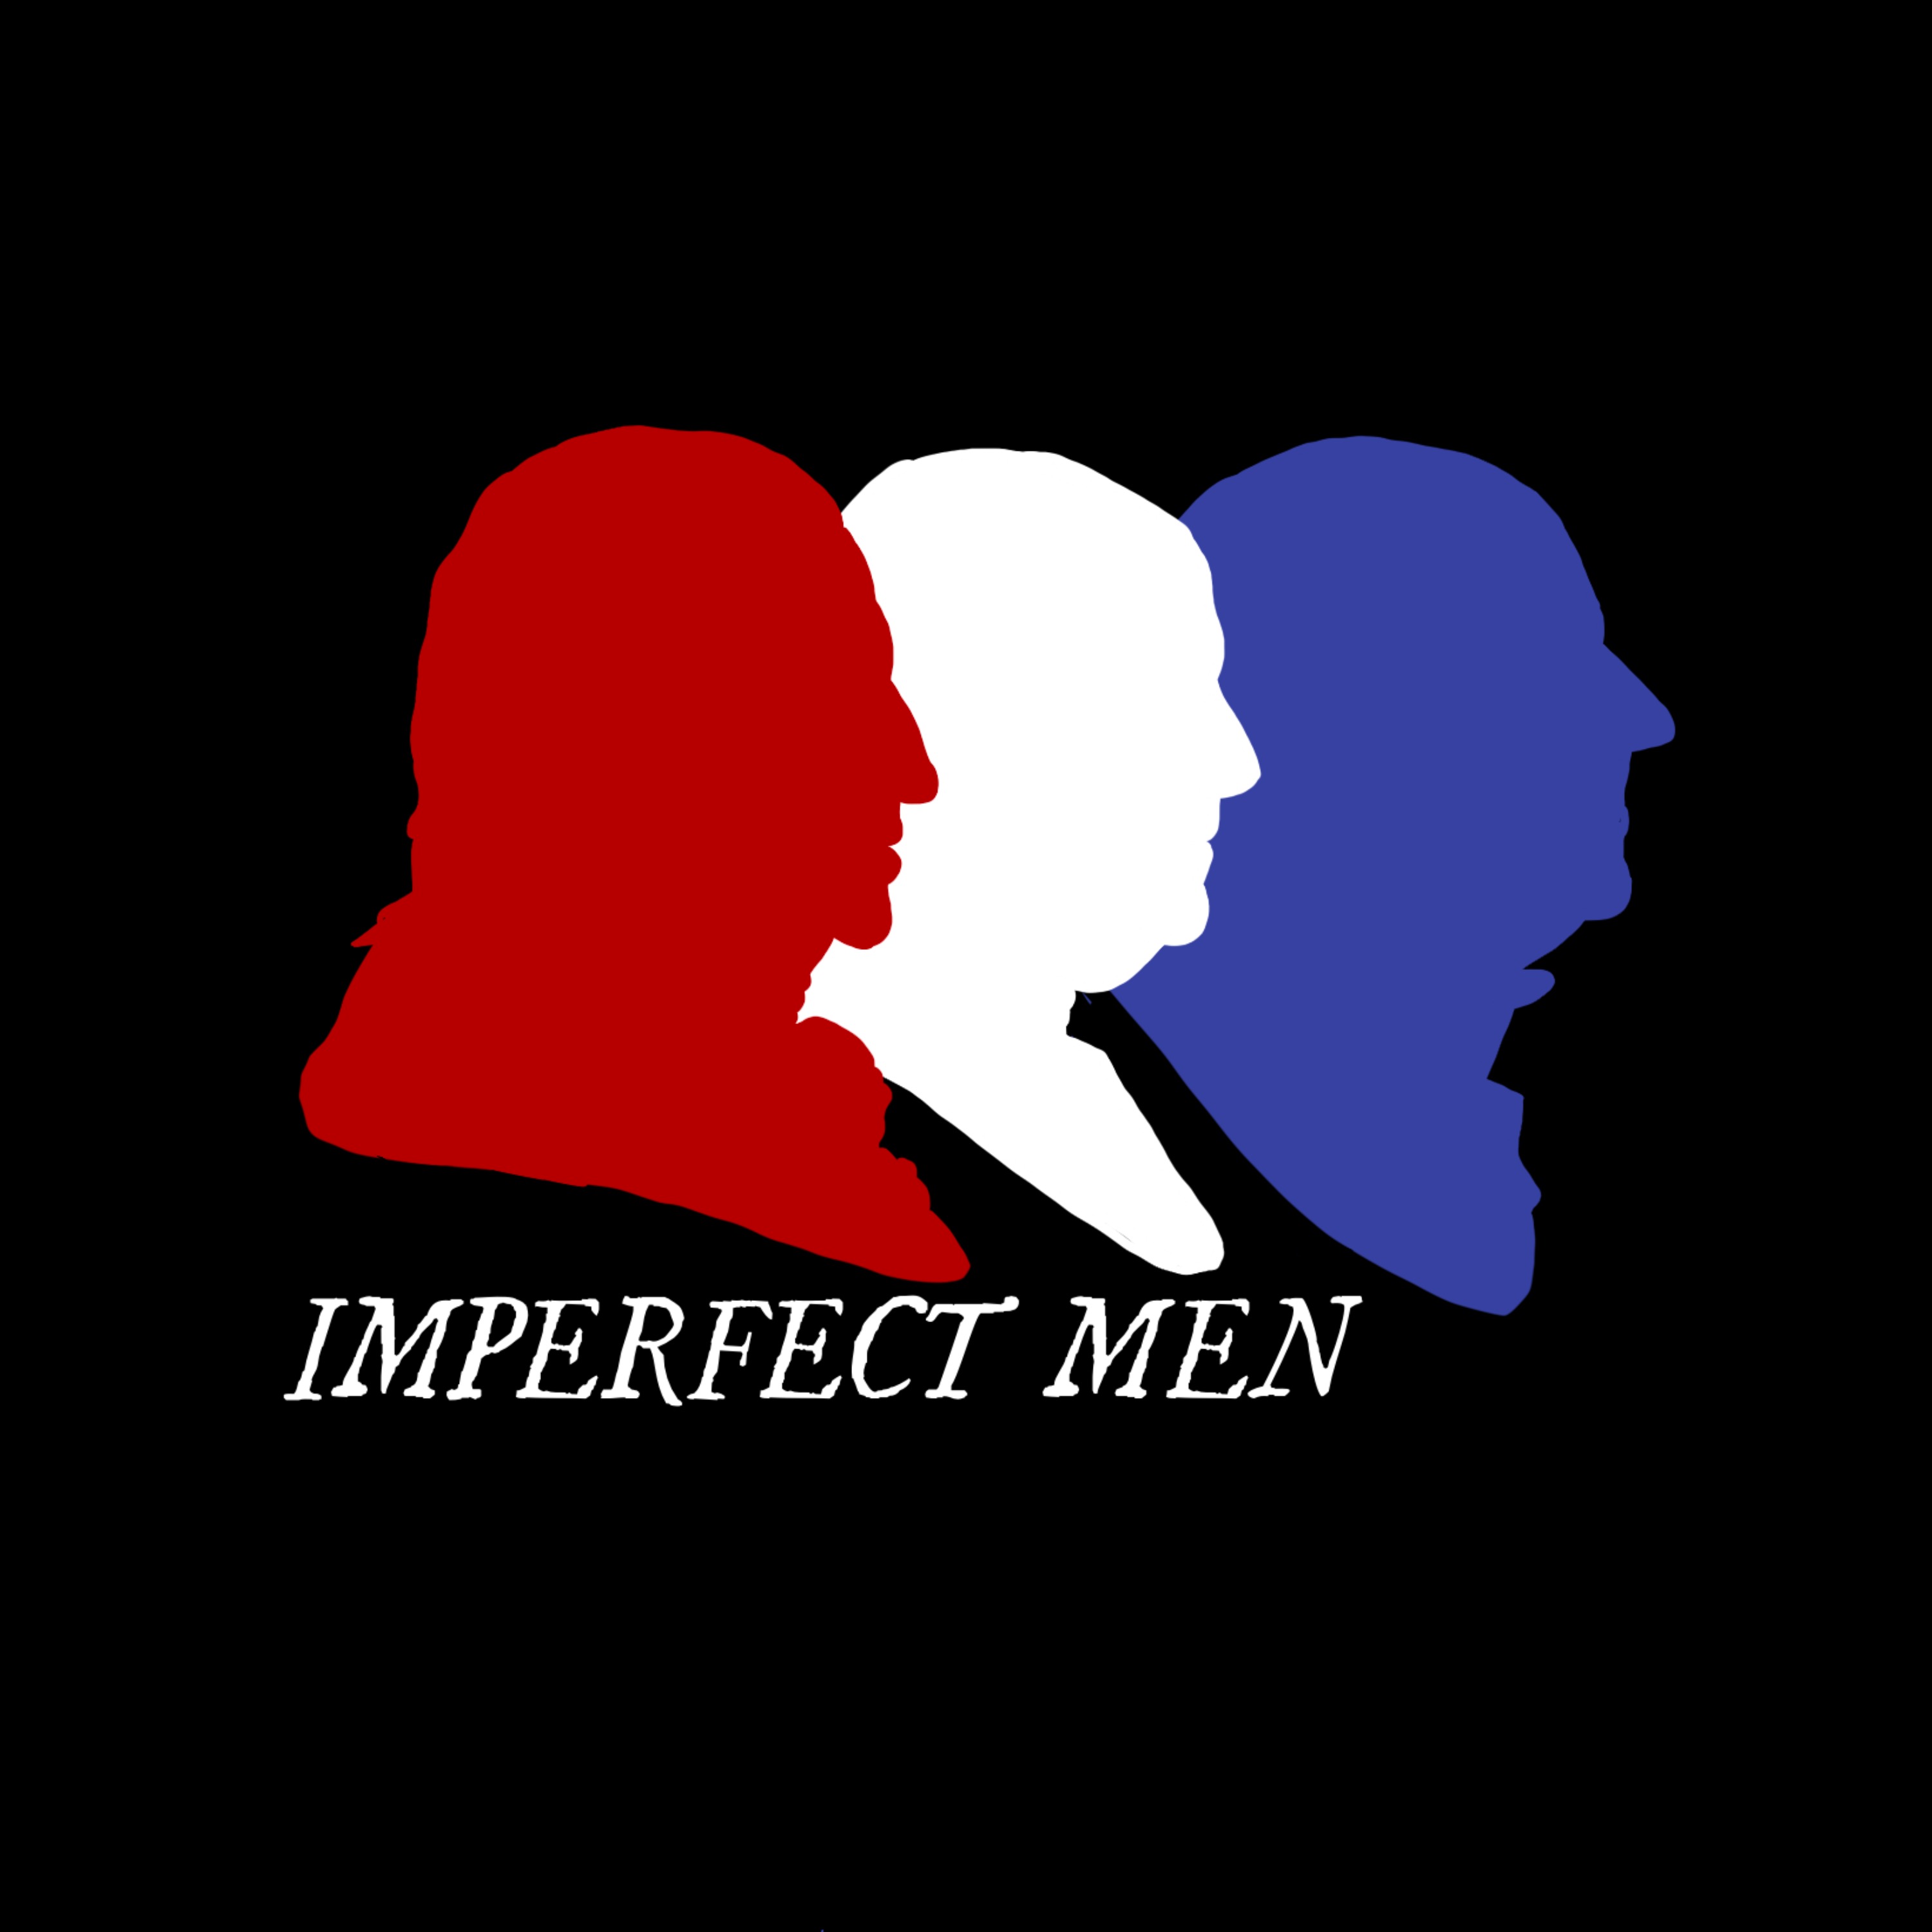 Imperfect Men